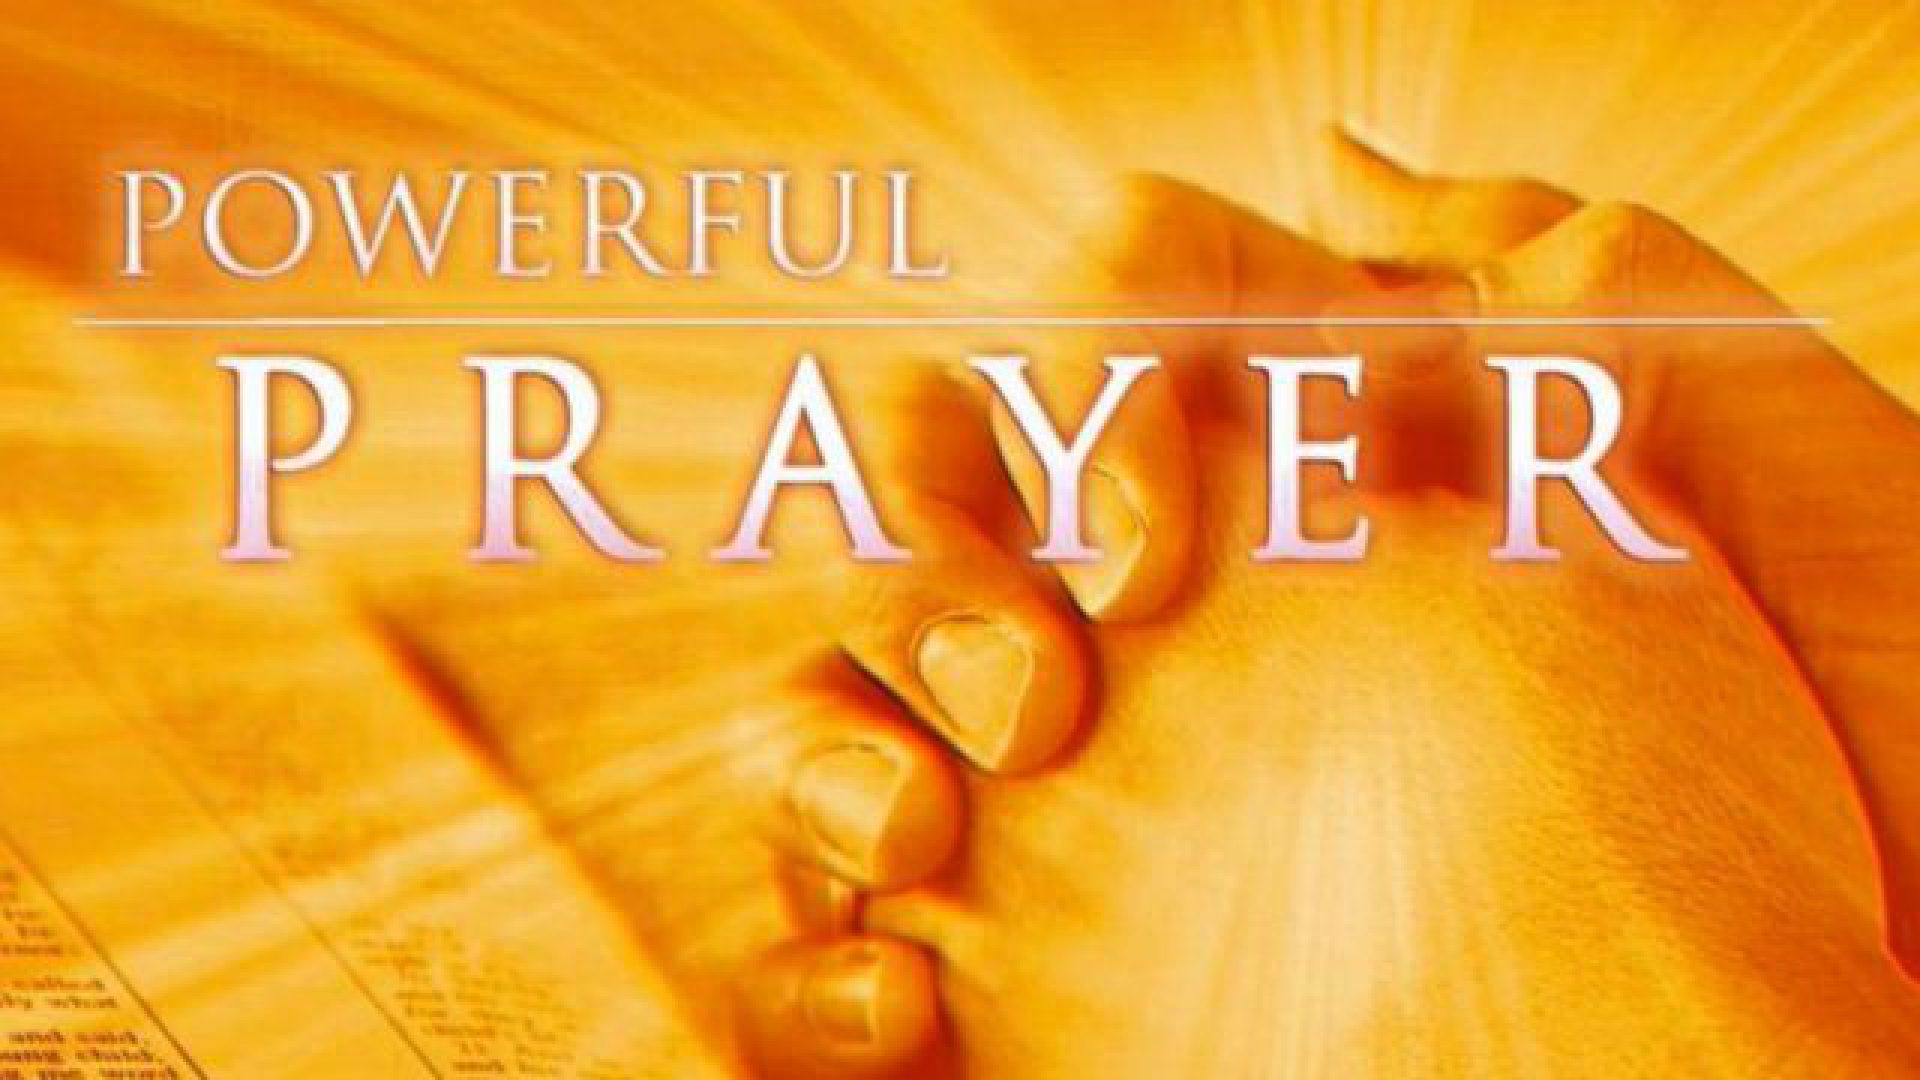 A POWERFUL PRAYER